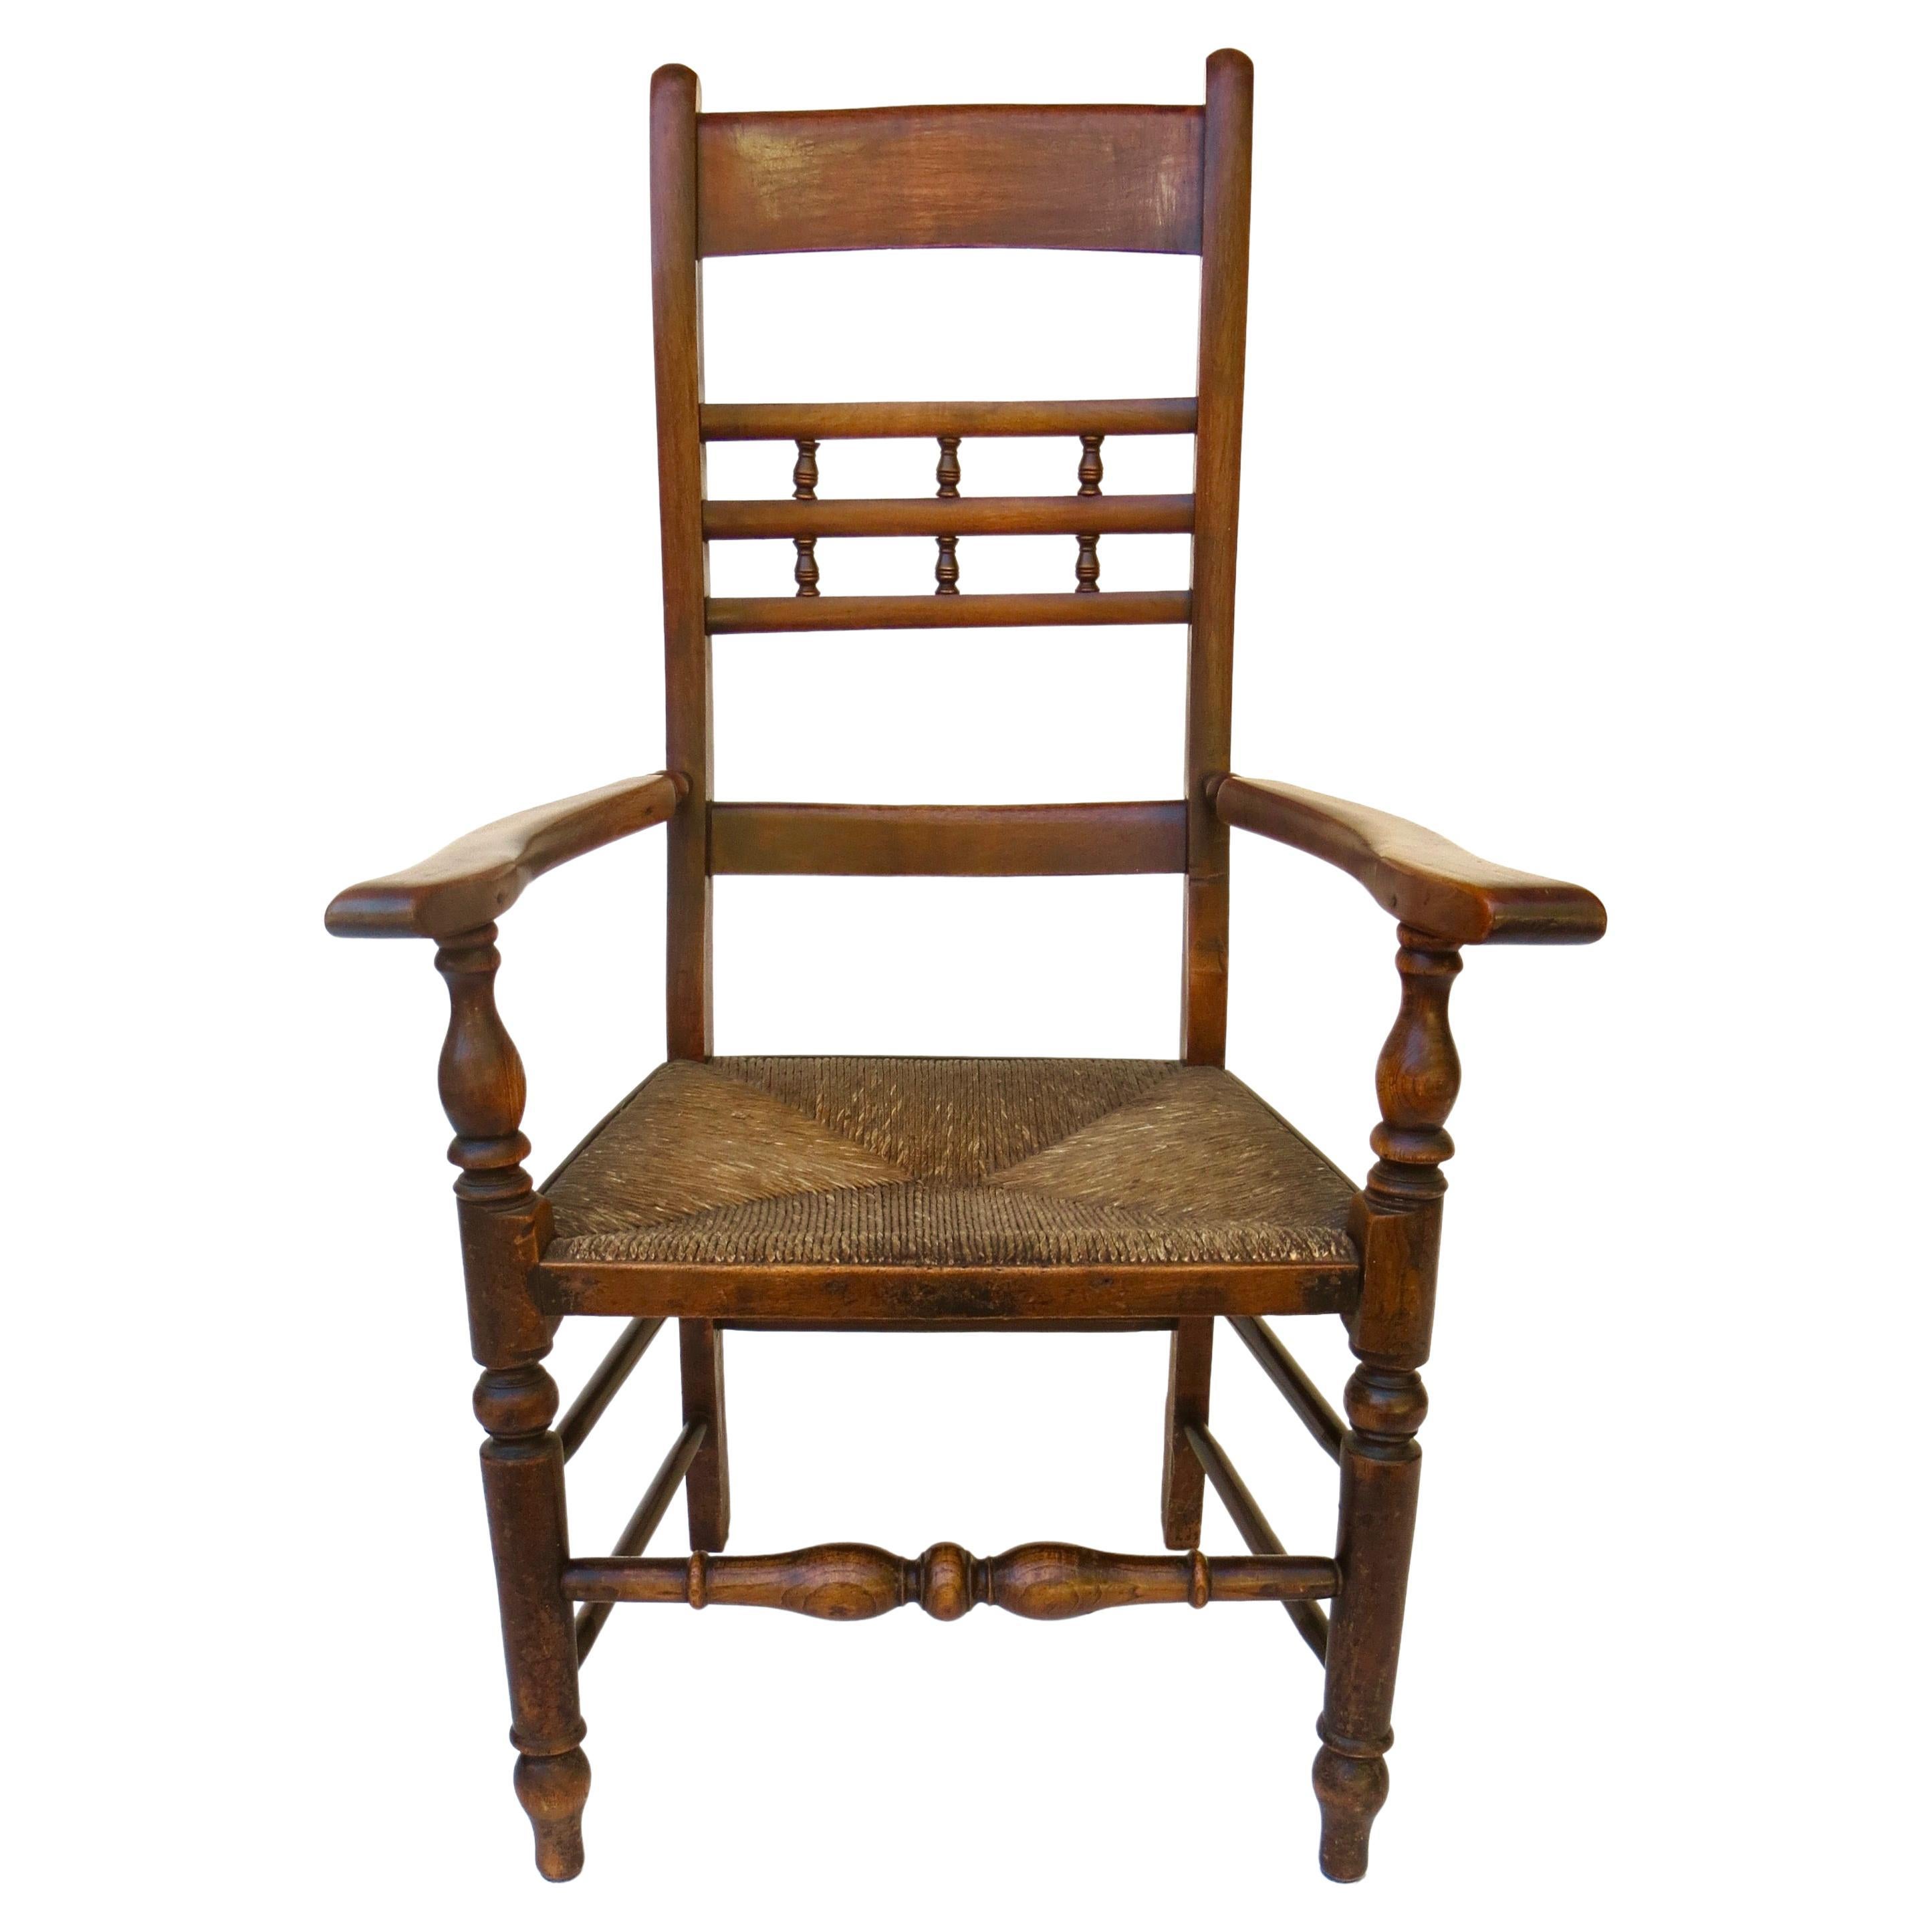 Mid 19th C. Rush Seated Ladder Back Chair. English, circa 1850